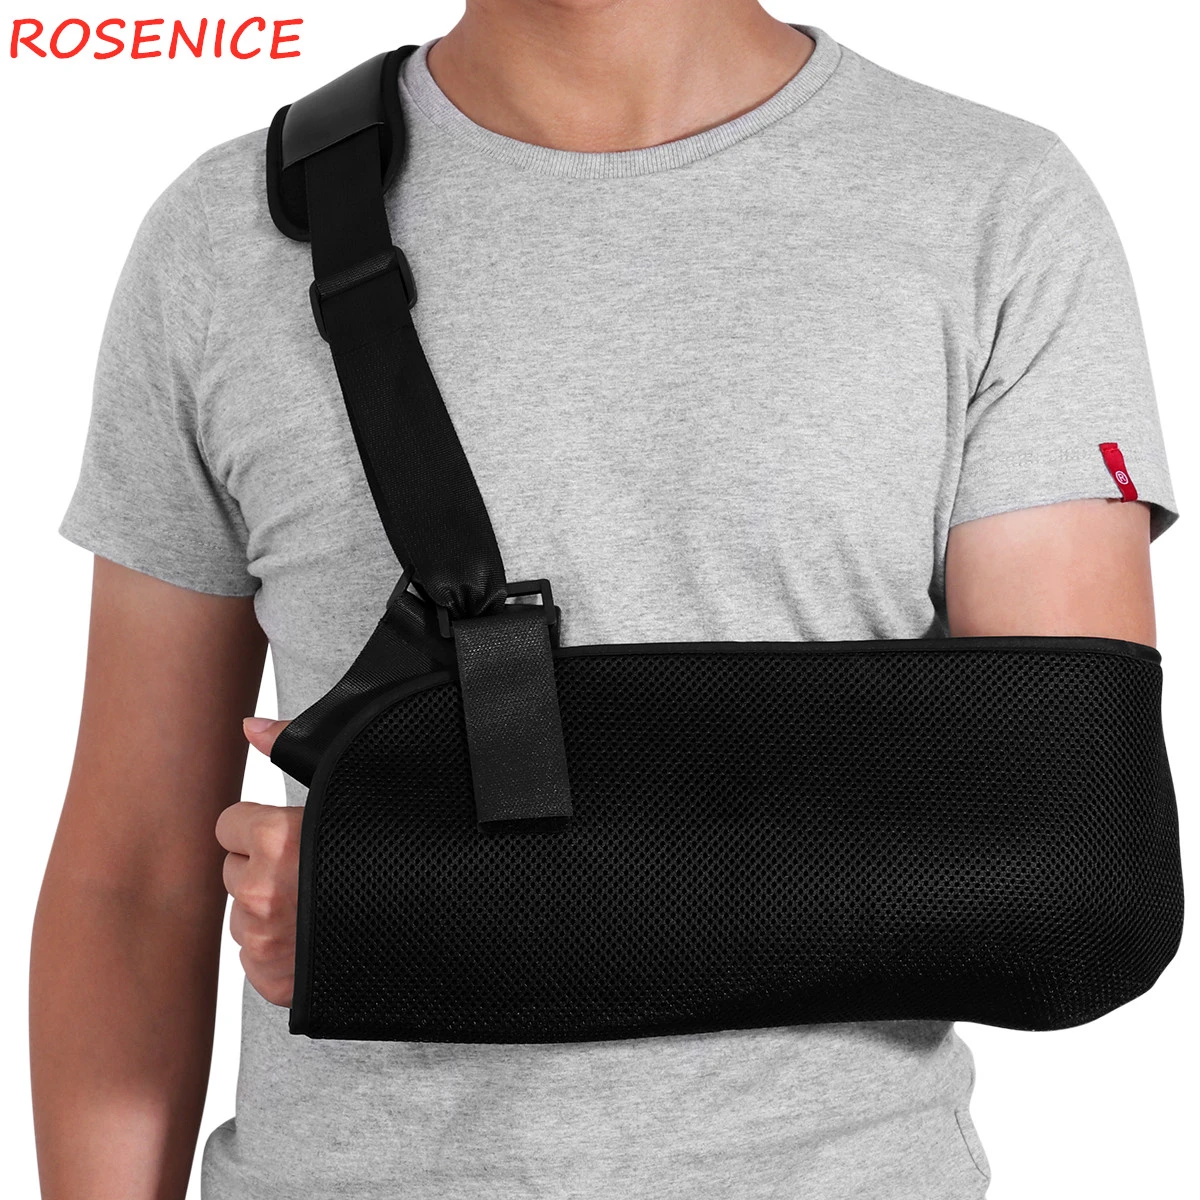 ROSENICE Arm Sling Support Adjustable Breathable Shoulder Strap Brace Immobilizer Wrist Elbow Forearm Support Brace Strap